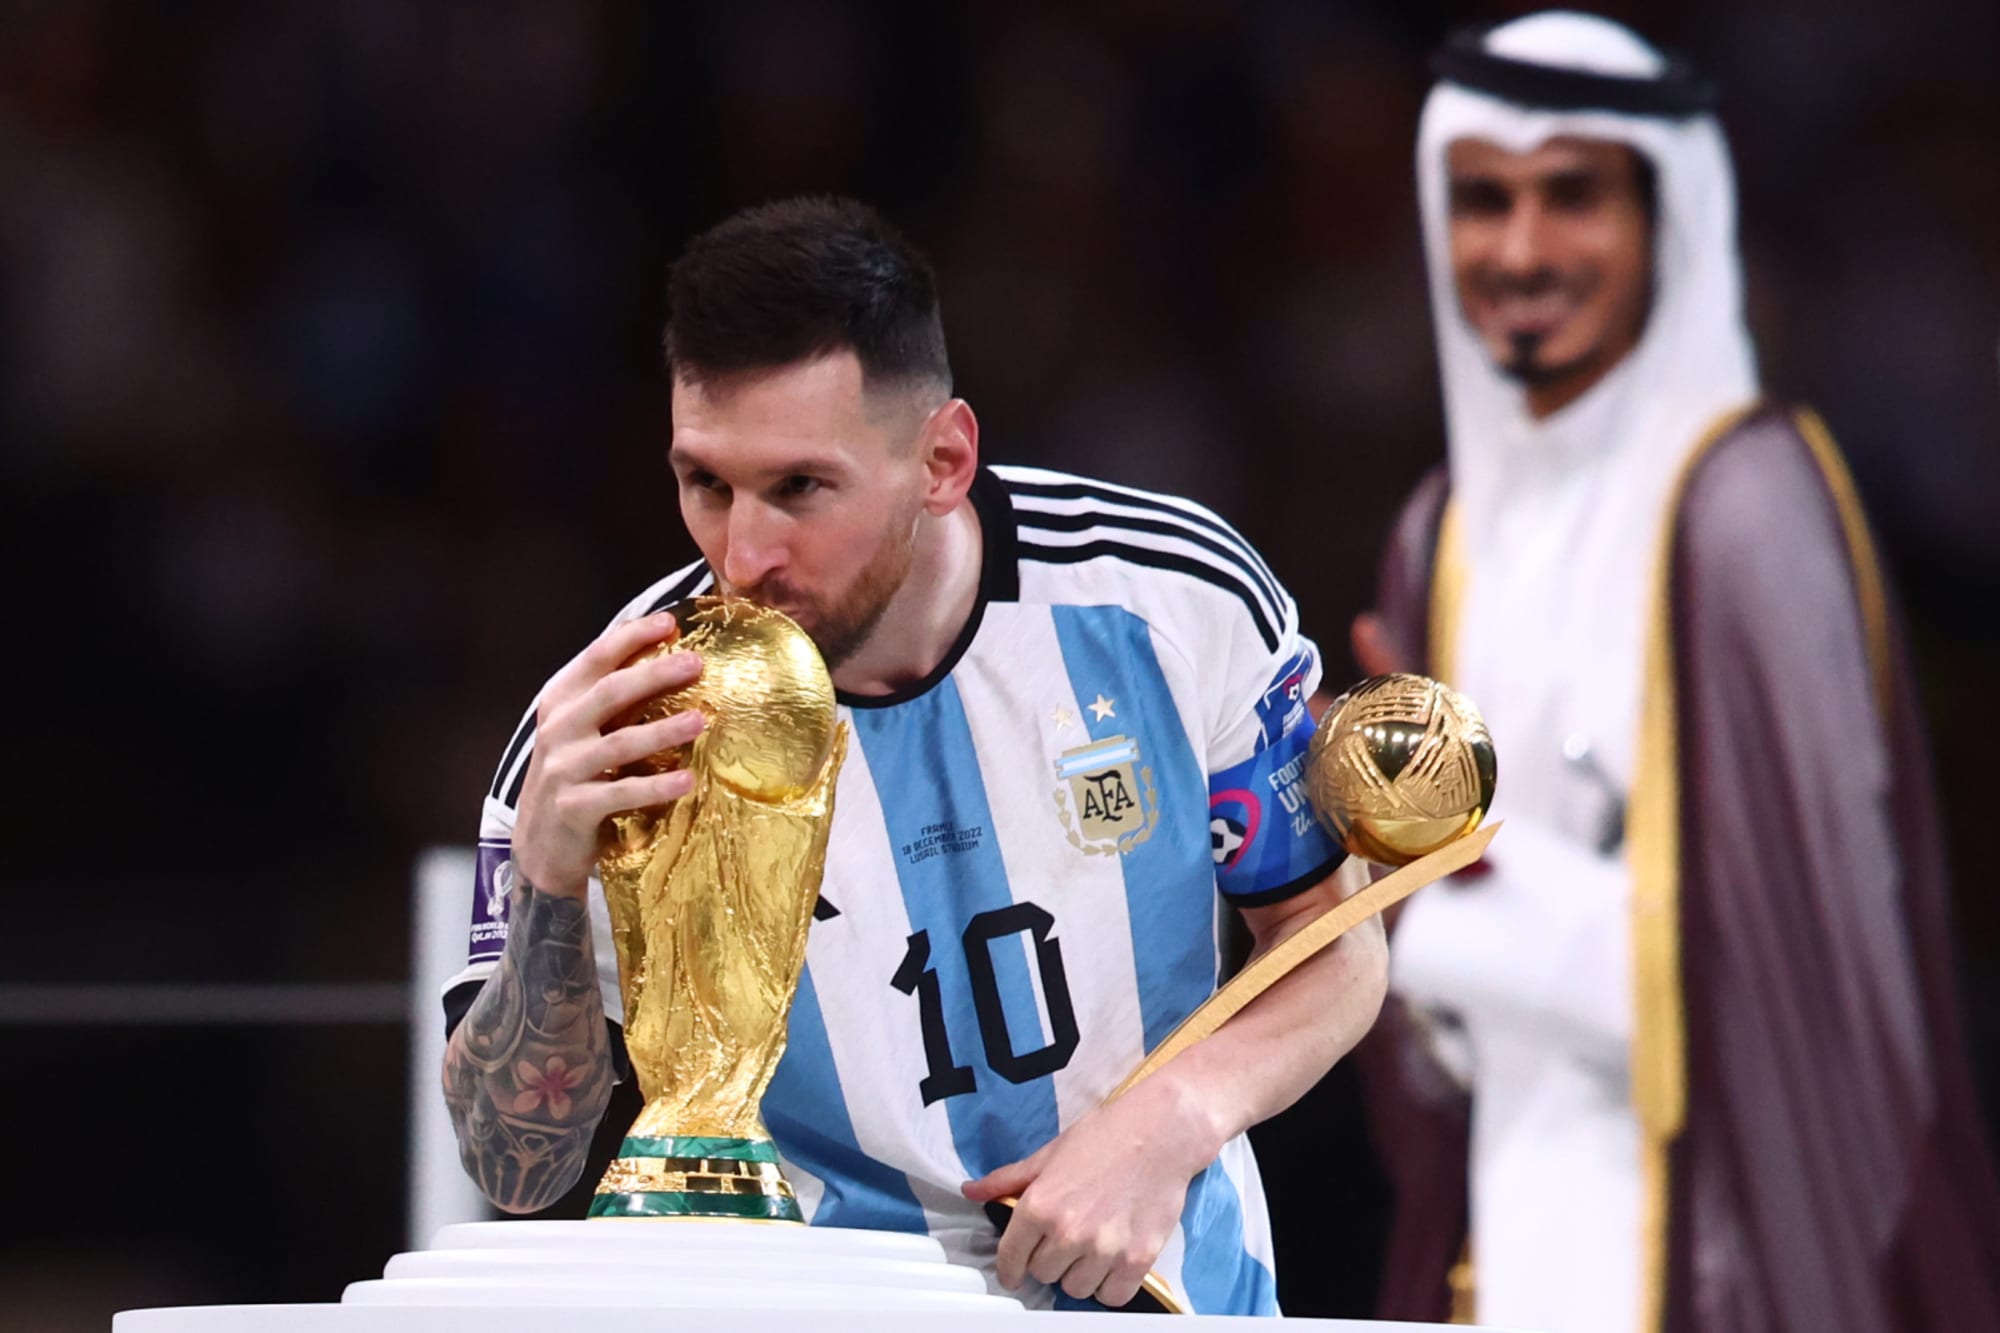 Lionel Messi Adidas Golden Ball Award Winner In FIFA World Cup